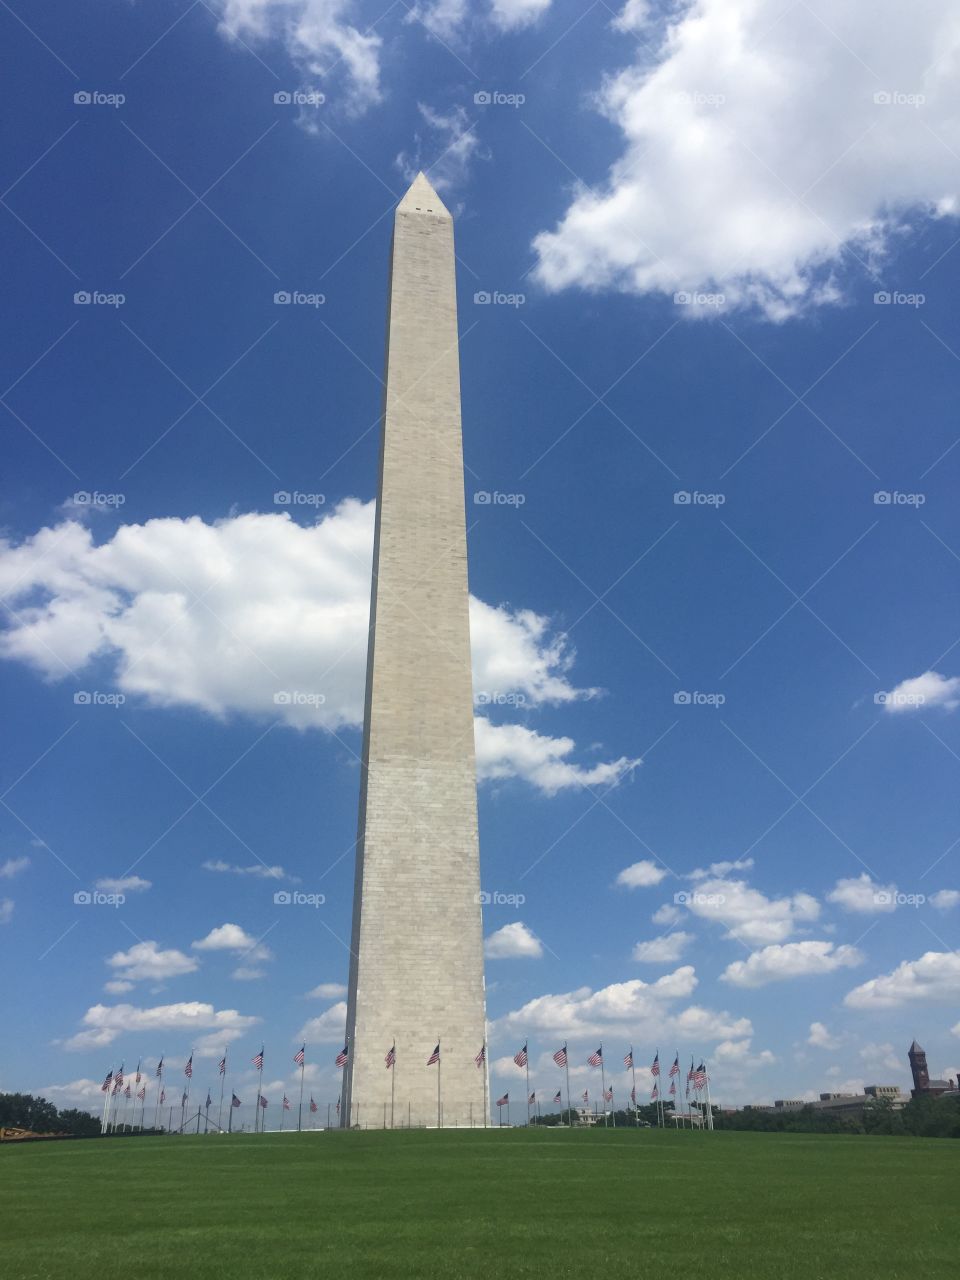 Washington Monument on a hot summer day